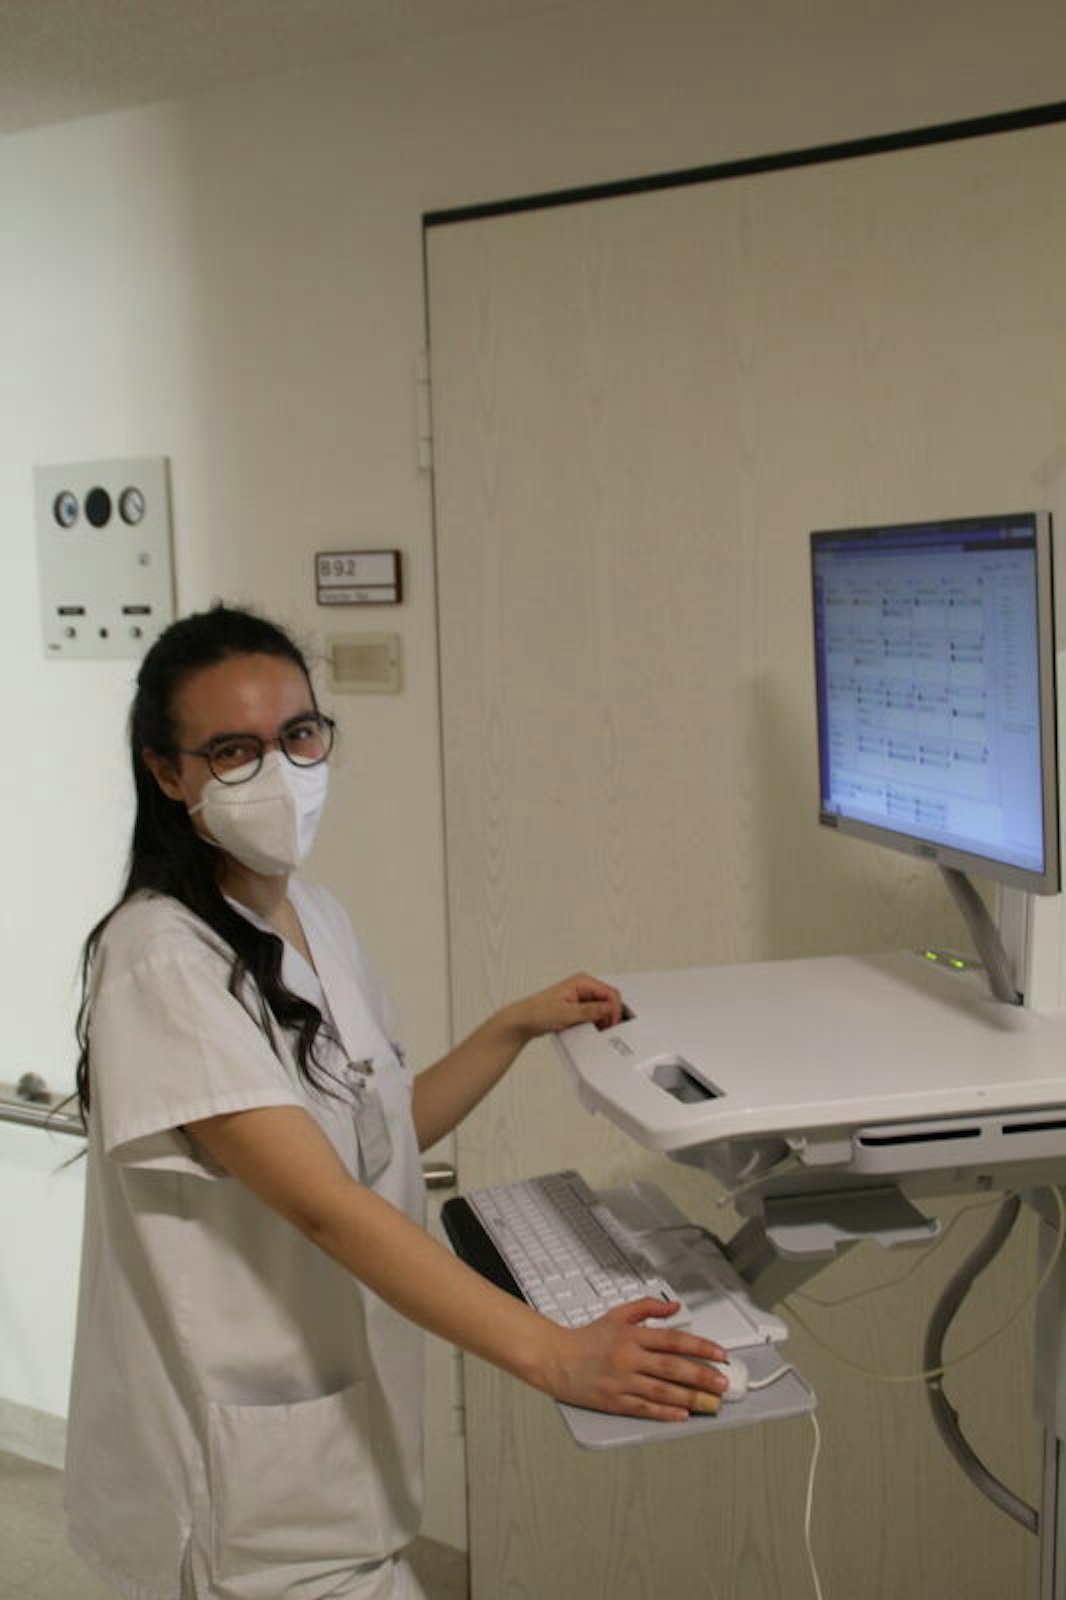 Pflegt Patientendaten in den PC ein: Paula Castro Pinzon.